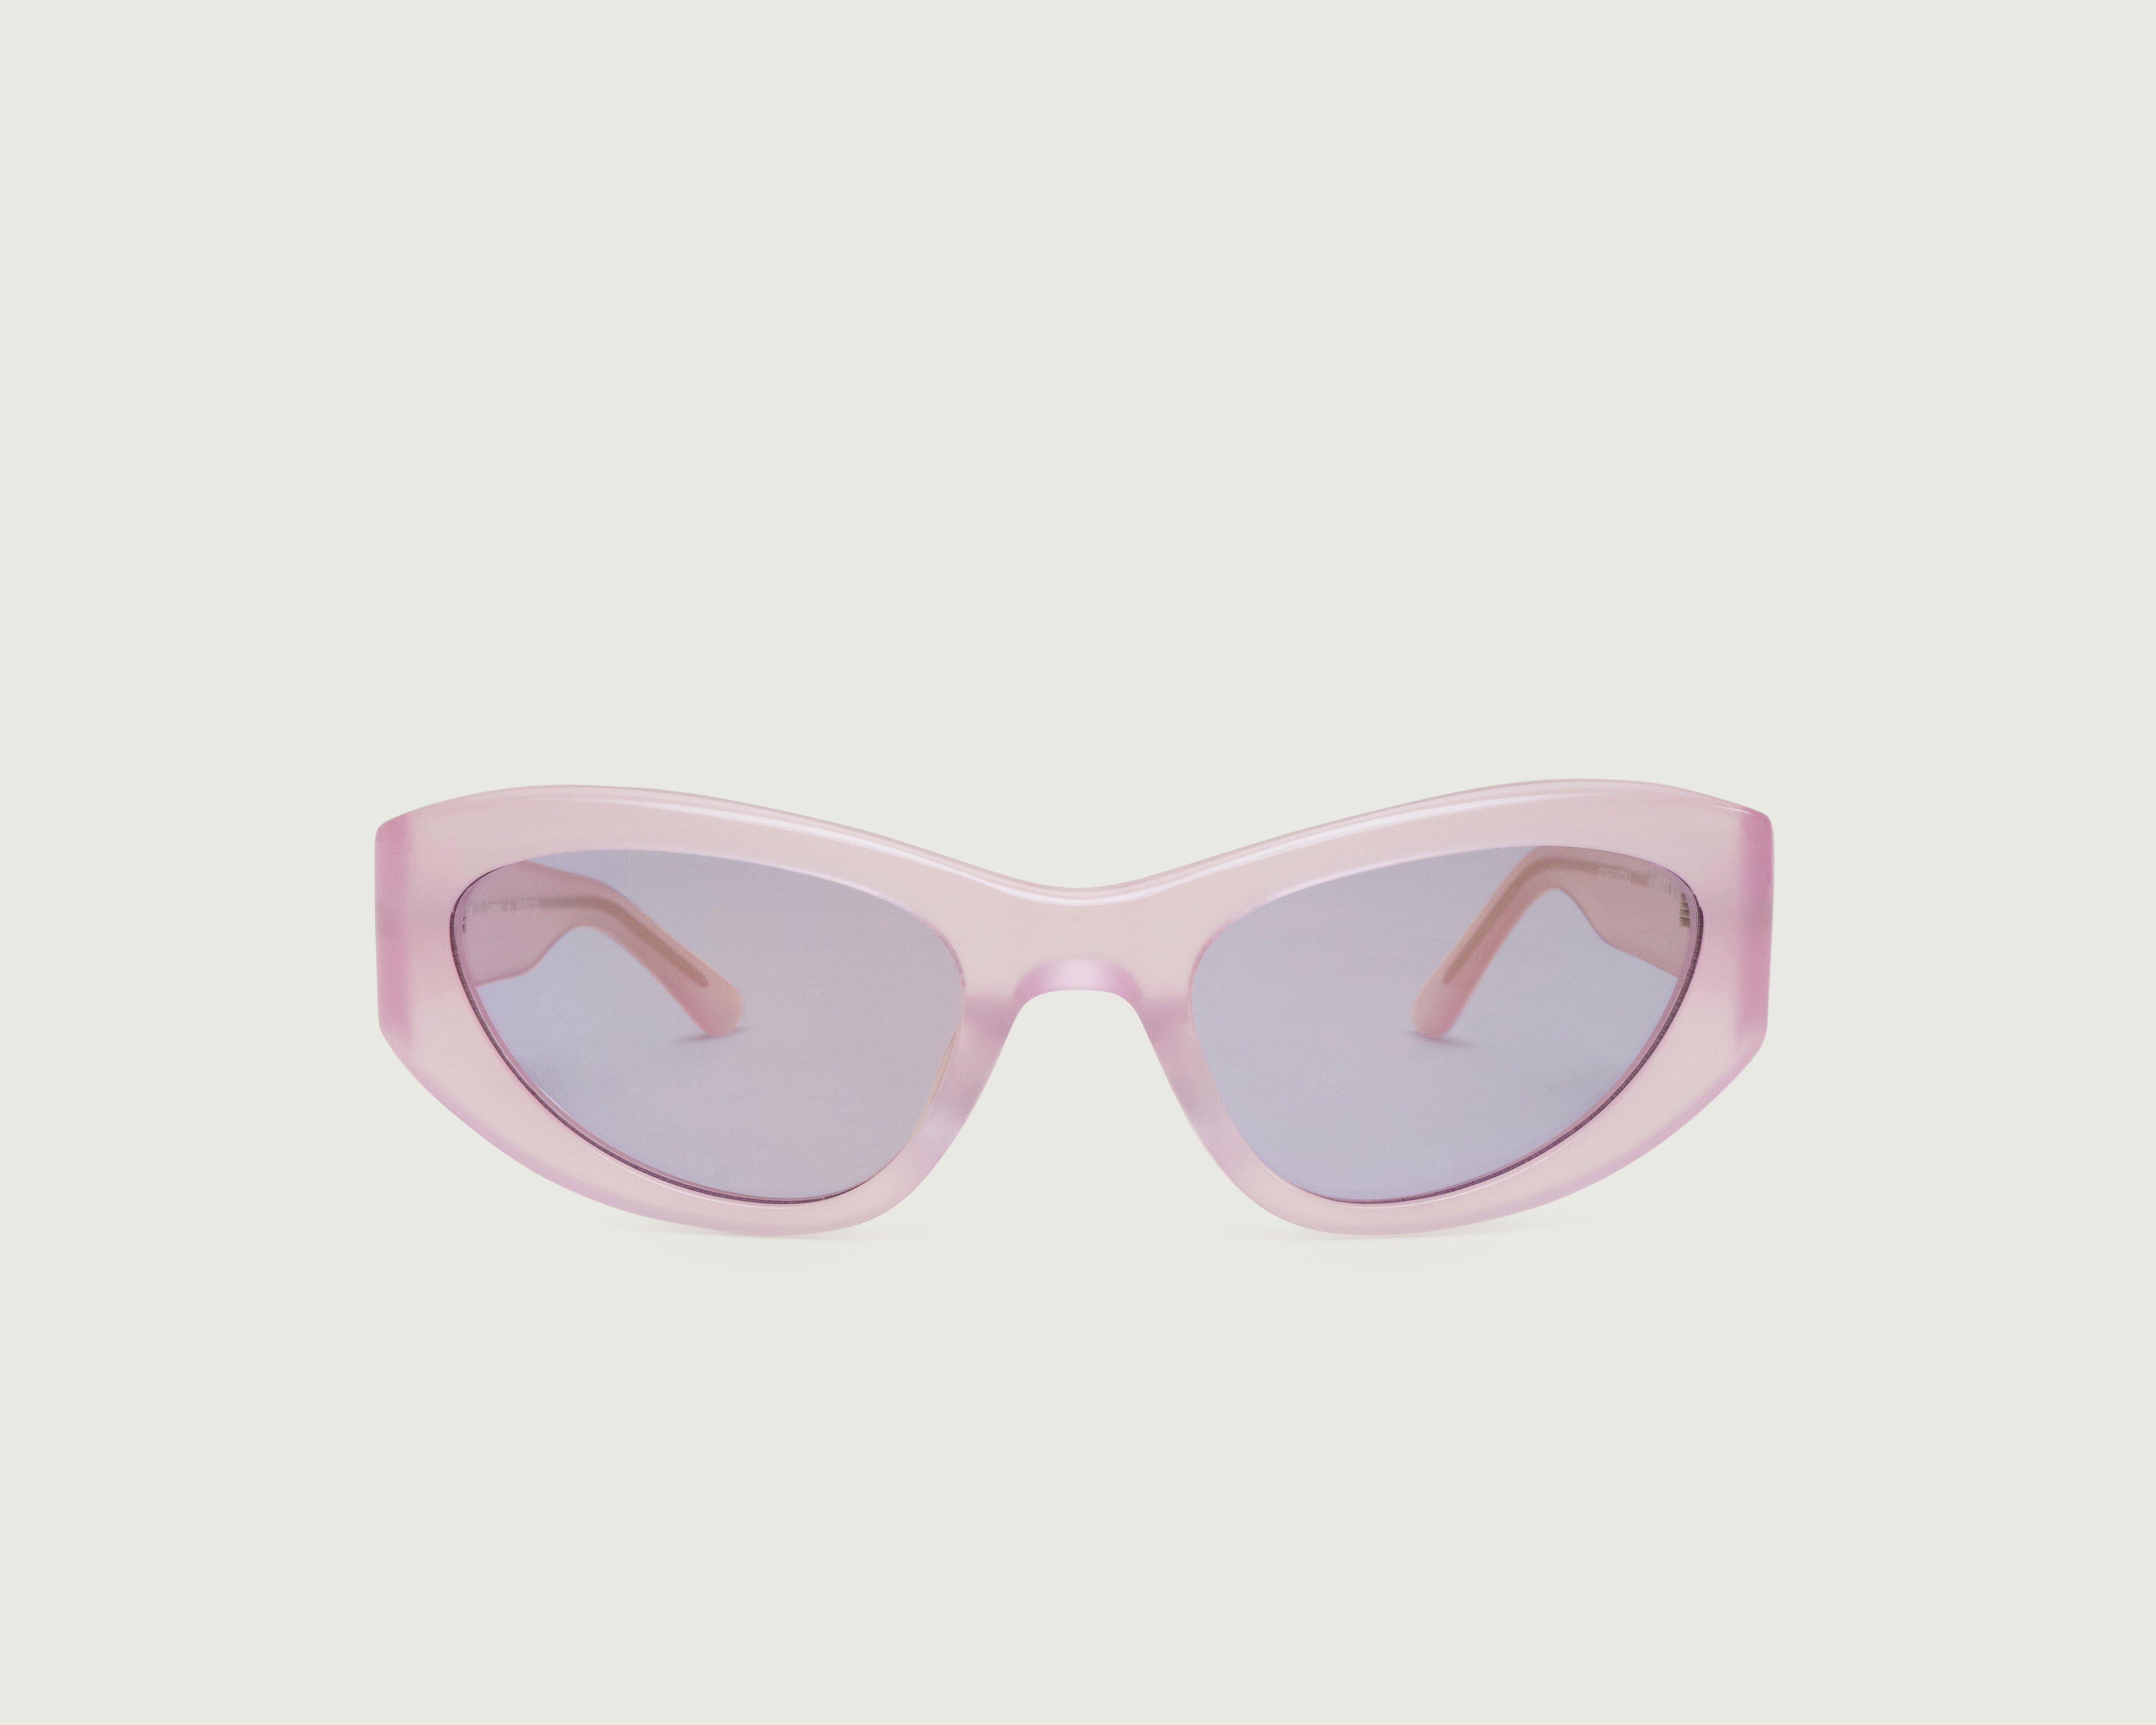 Venus::Sol Sunglasses cateye pink acetate front